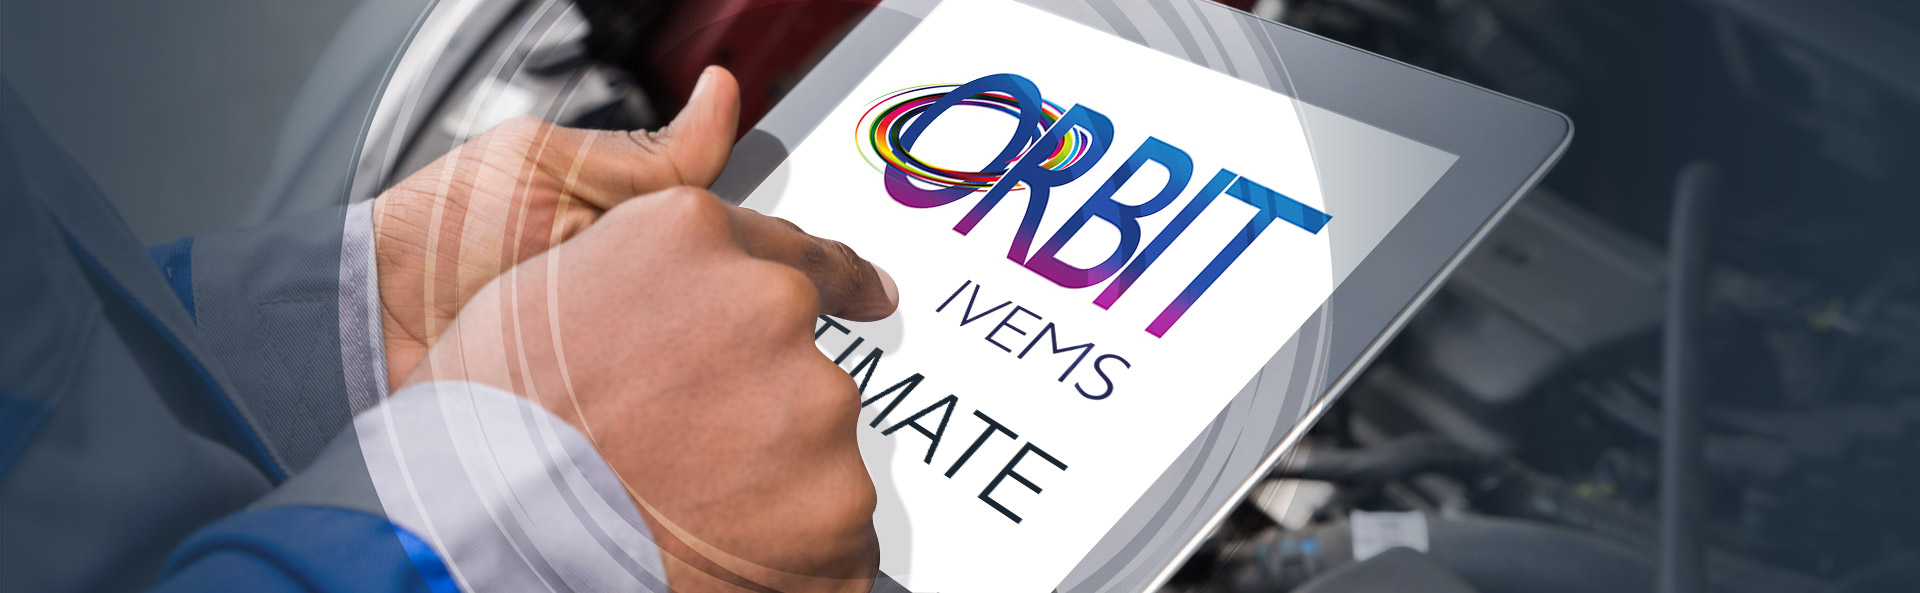 Orbit Partnership